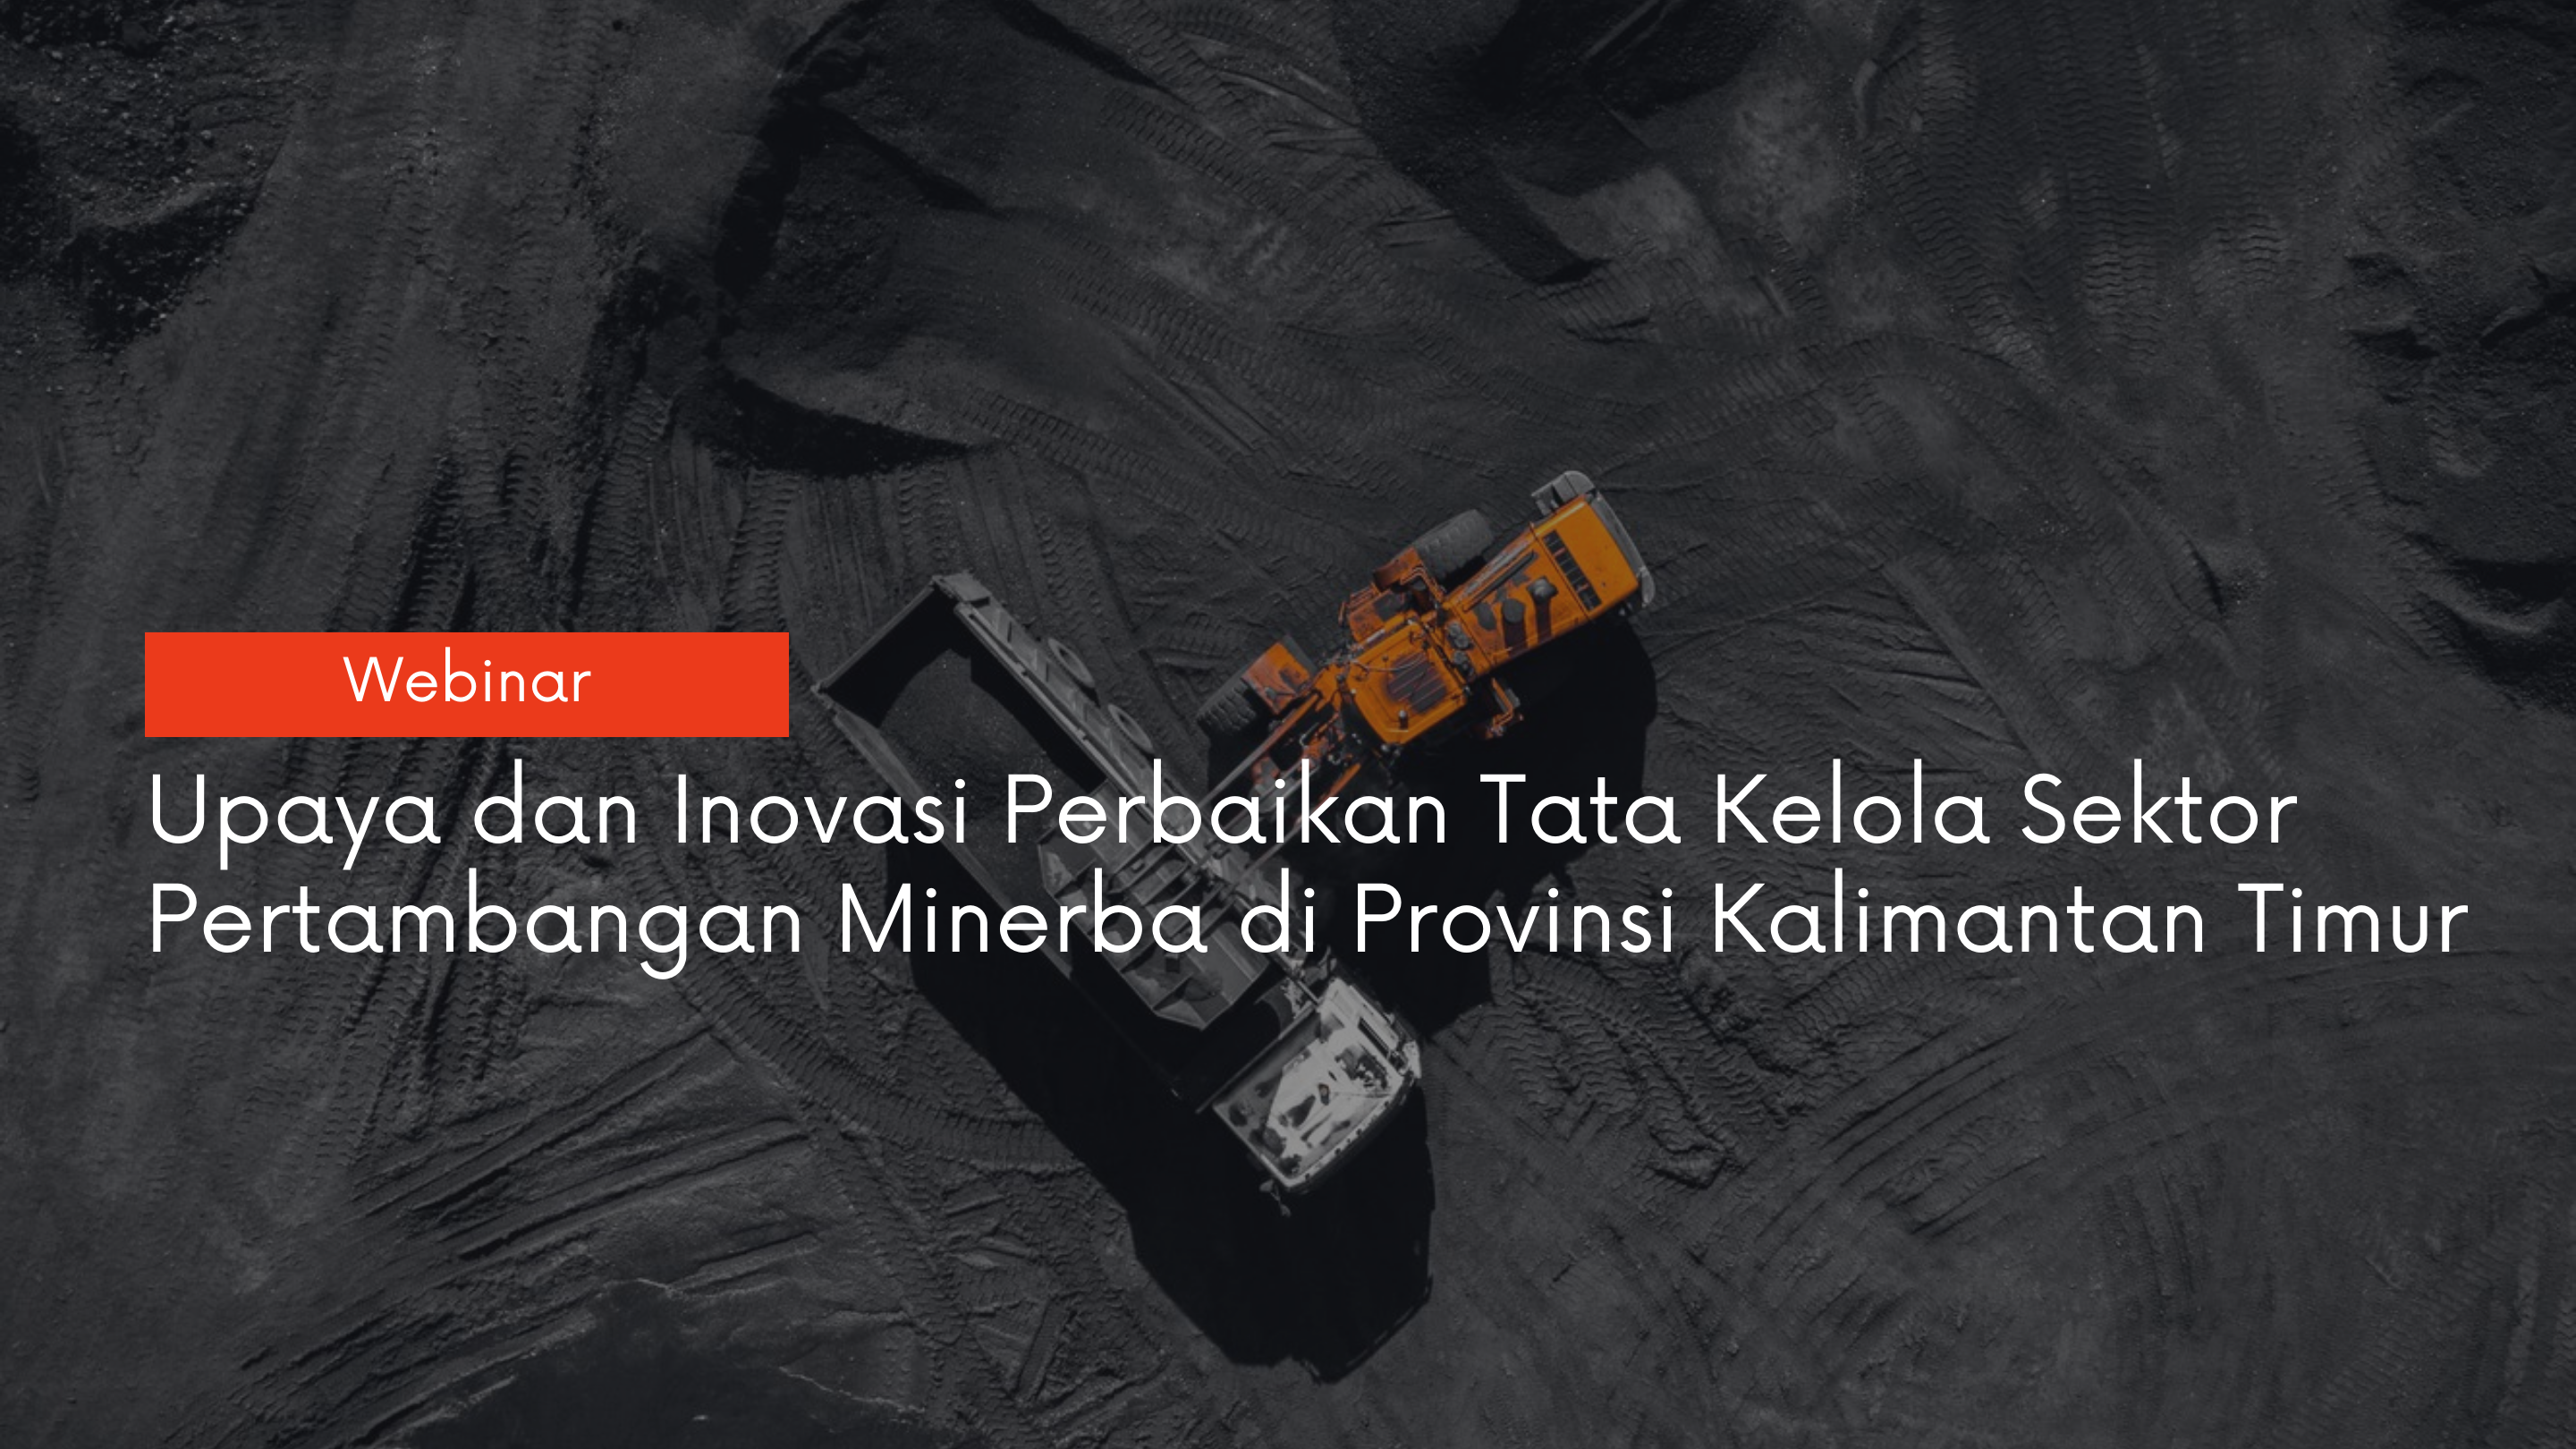 Upaya dan Inovasi Perbaikan Tata Kelola Sektor Pertambangan Minerba di Provinsi Kalimantan Timur